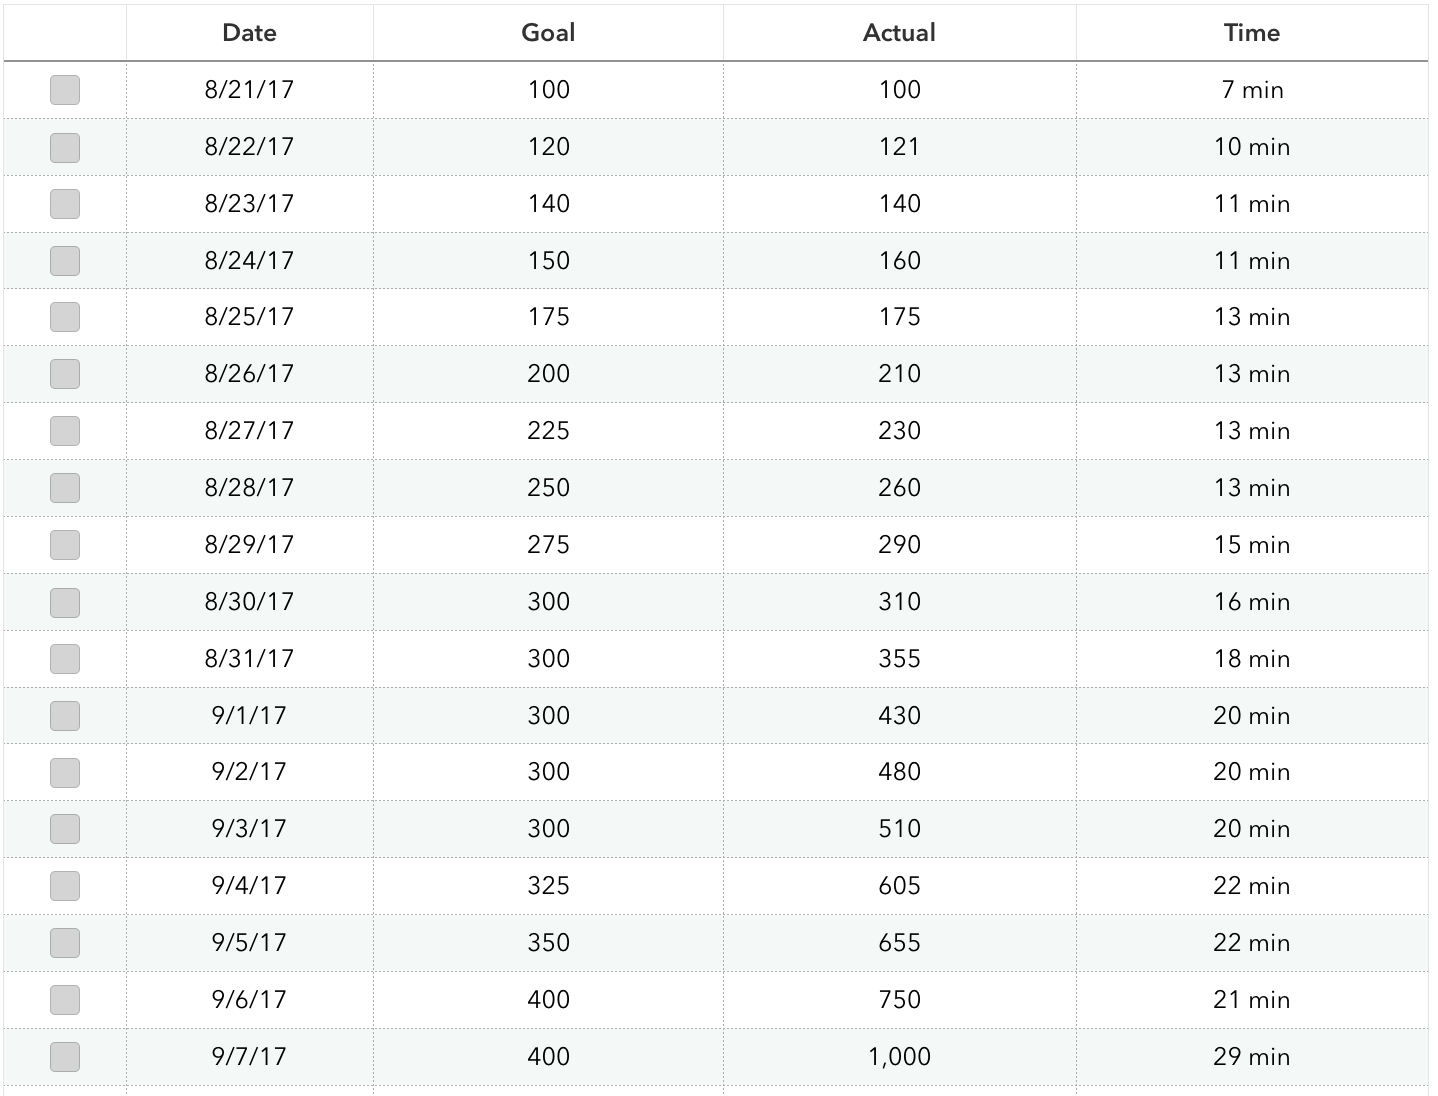 50 Day Squat Challenge Chart